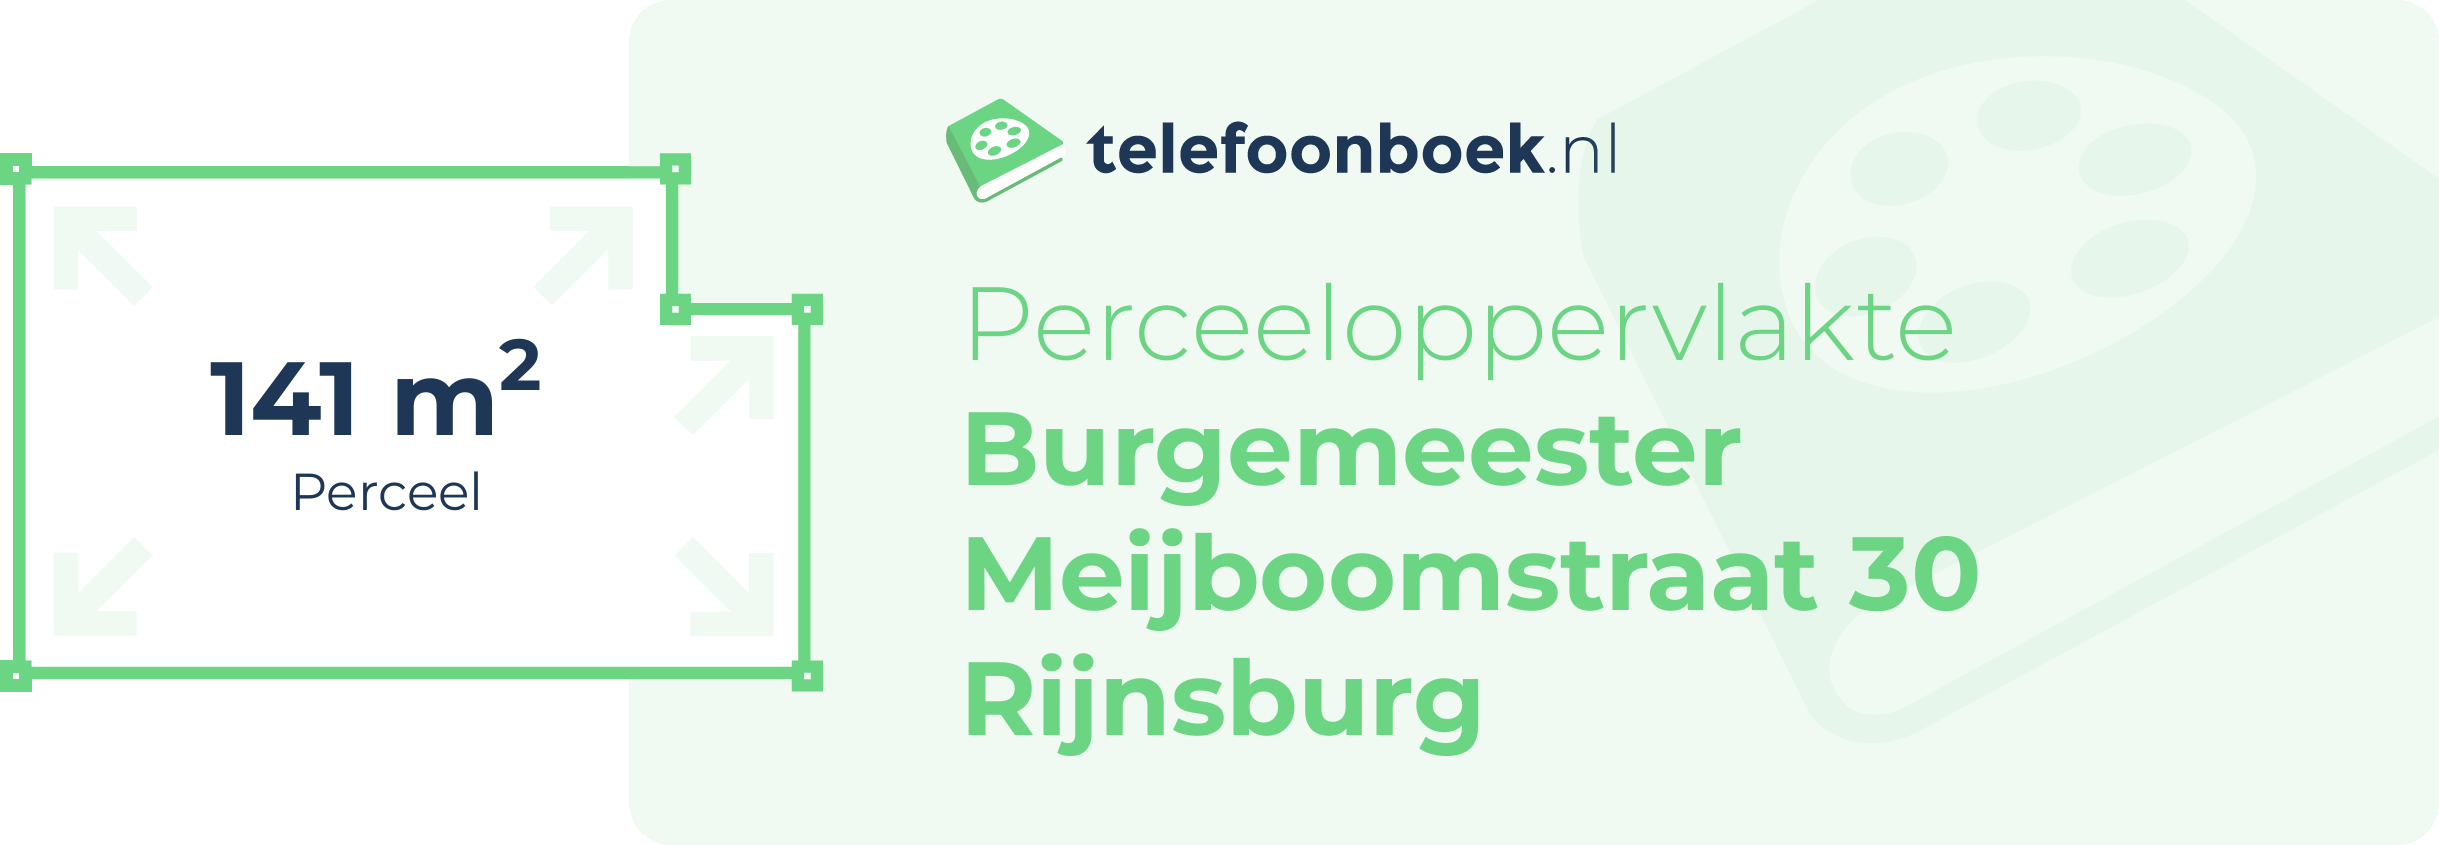 Perceeloppervlakte Burgemeester Meijboomstraat 30 Rijnsburg